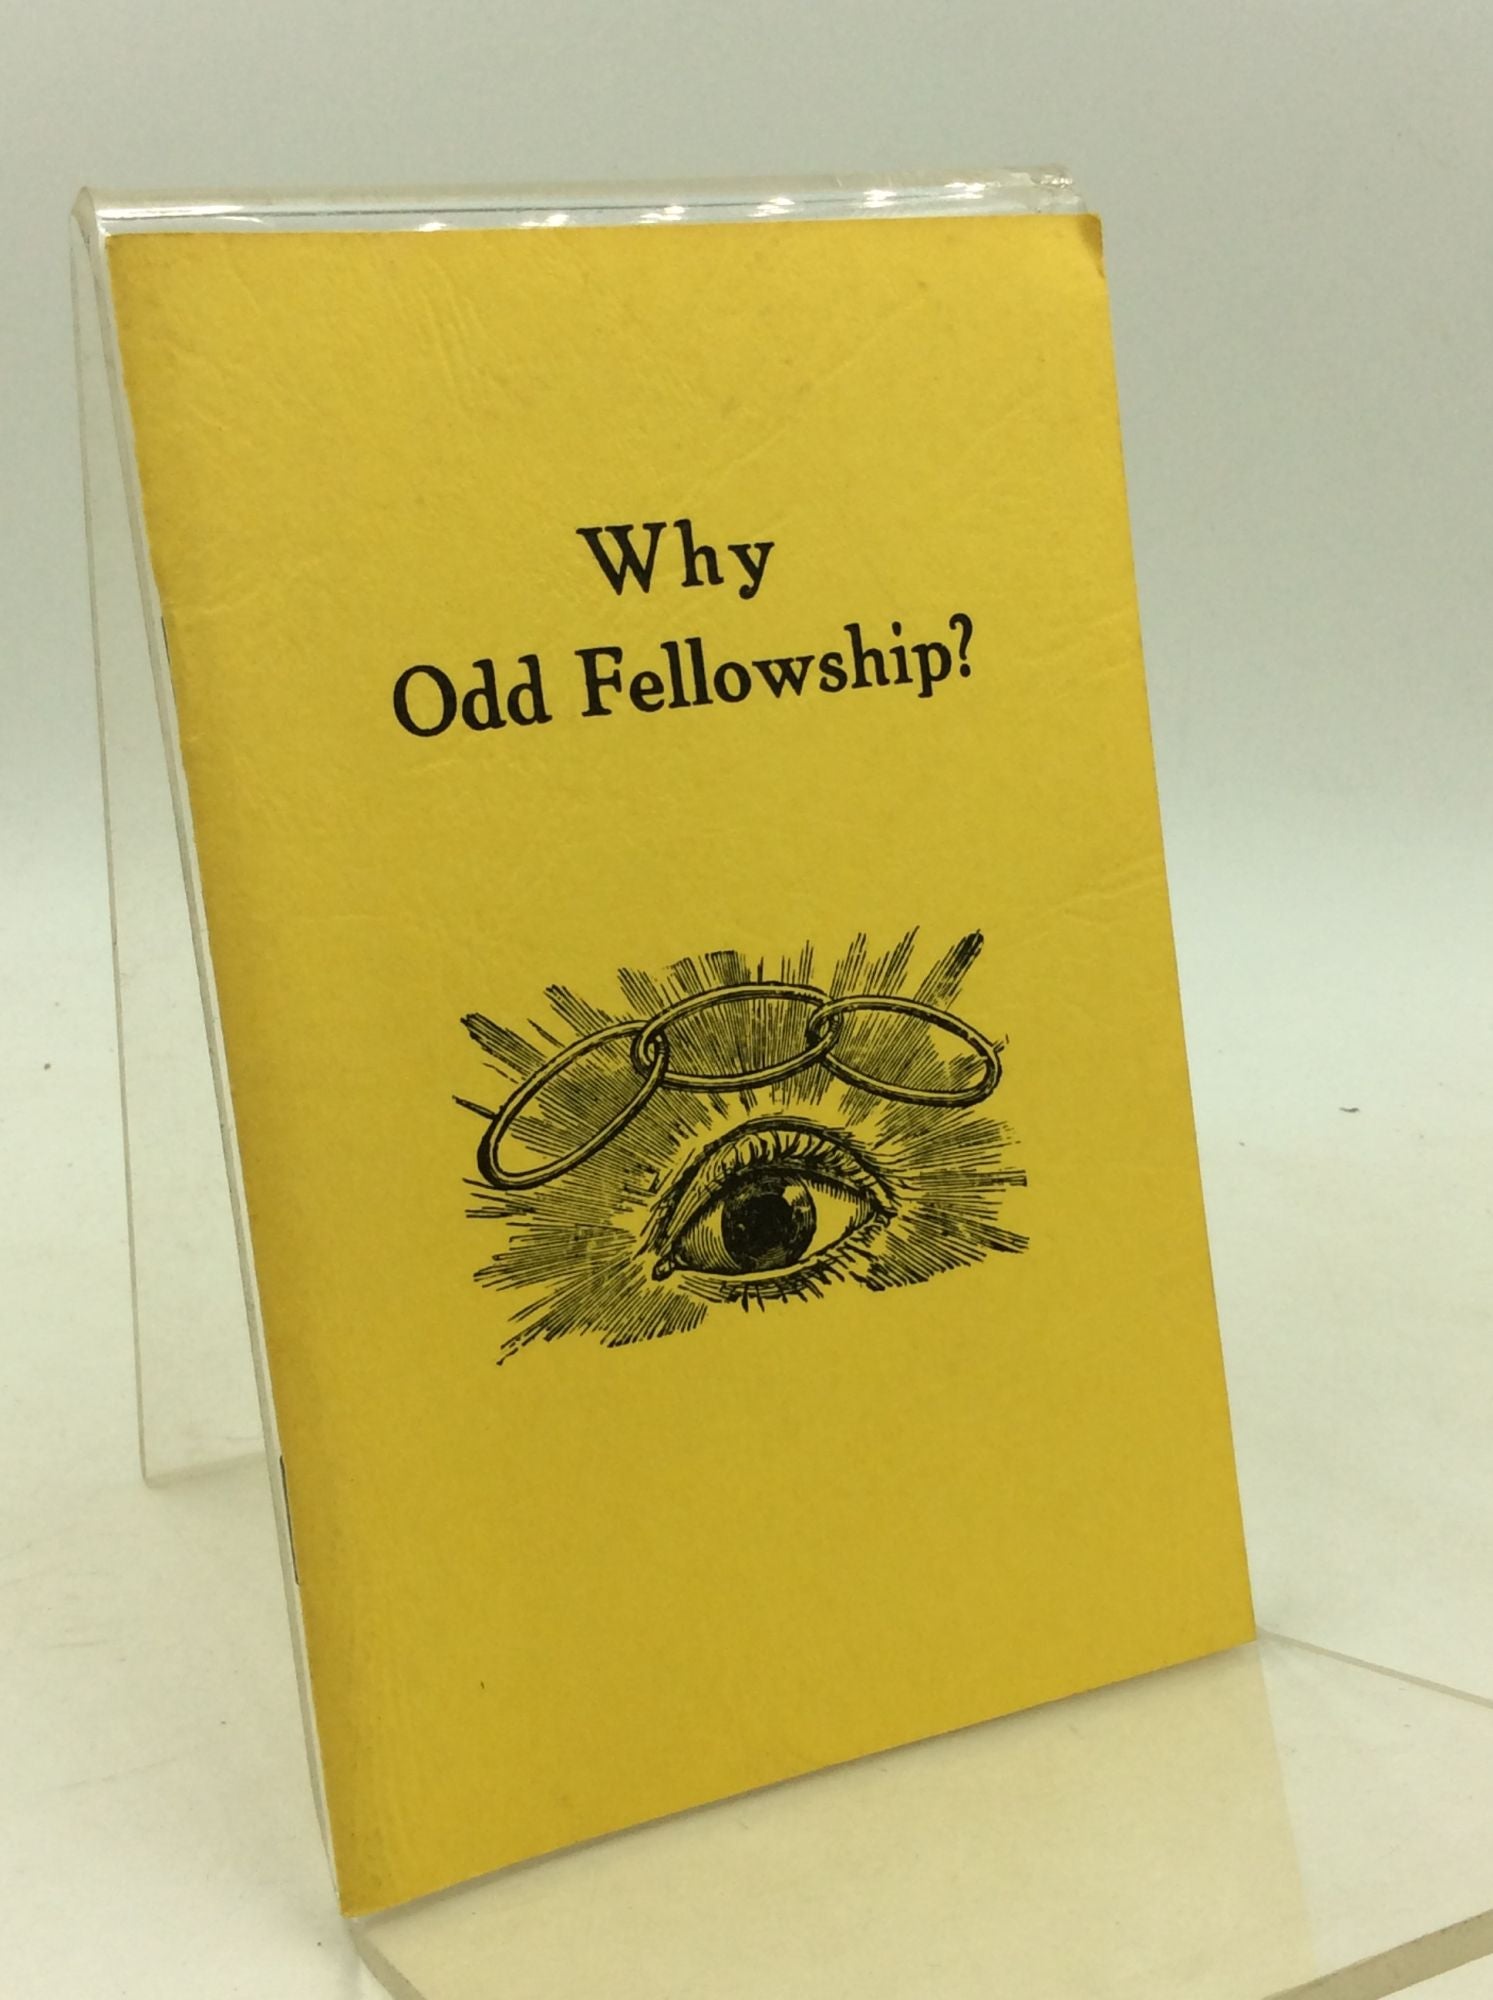  - Why Odd Fellowship